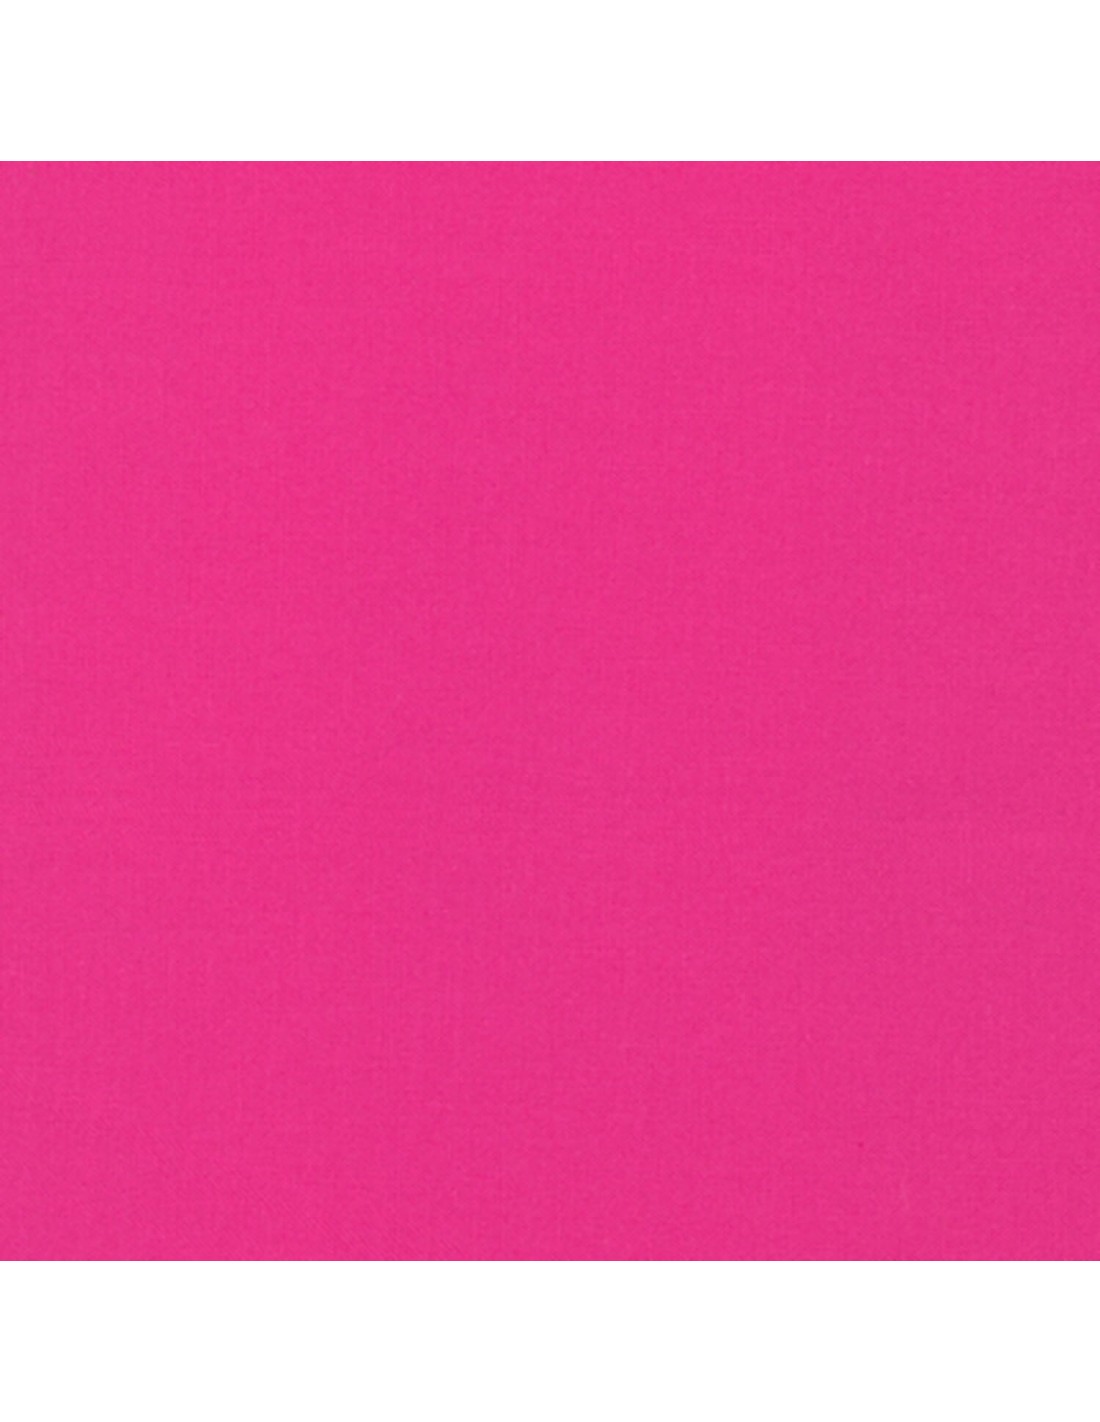 Solid cotton fabric Robert Kaufman Kona Valentine pink Color